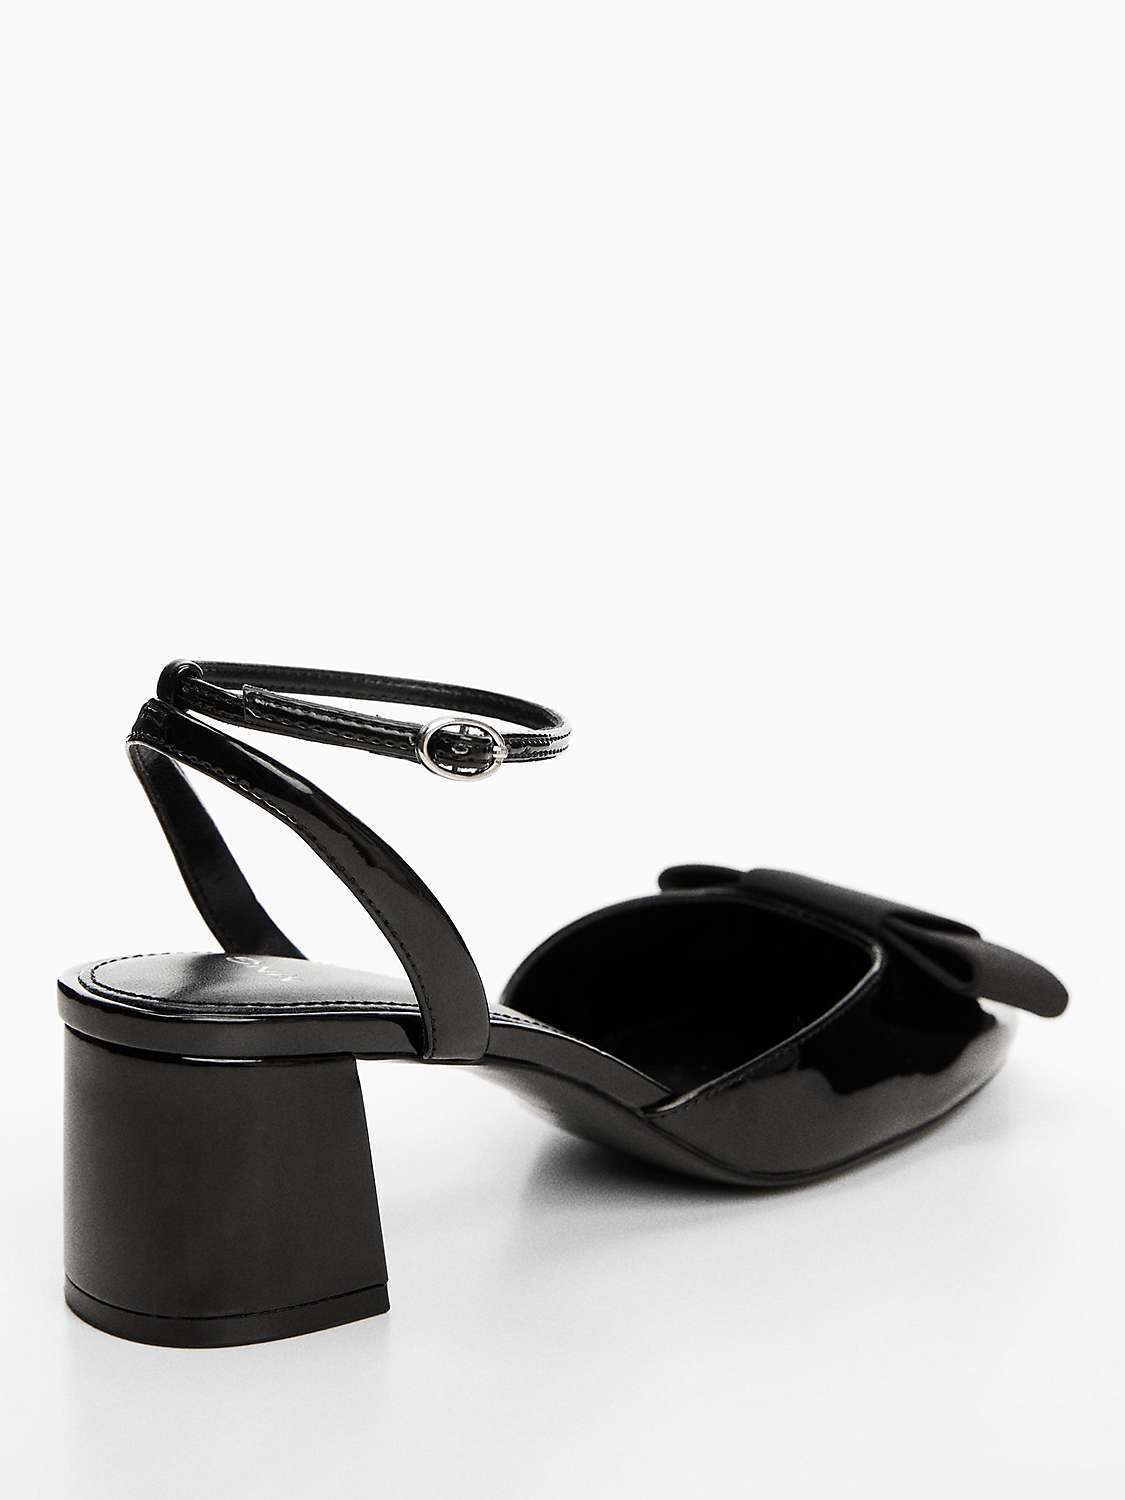 Buy Mango Megan Patent Bow Shoes, Black Online at johnlewis.com